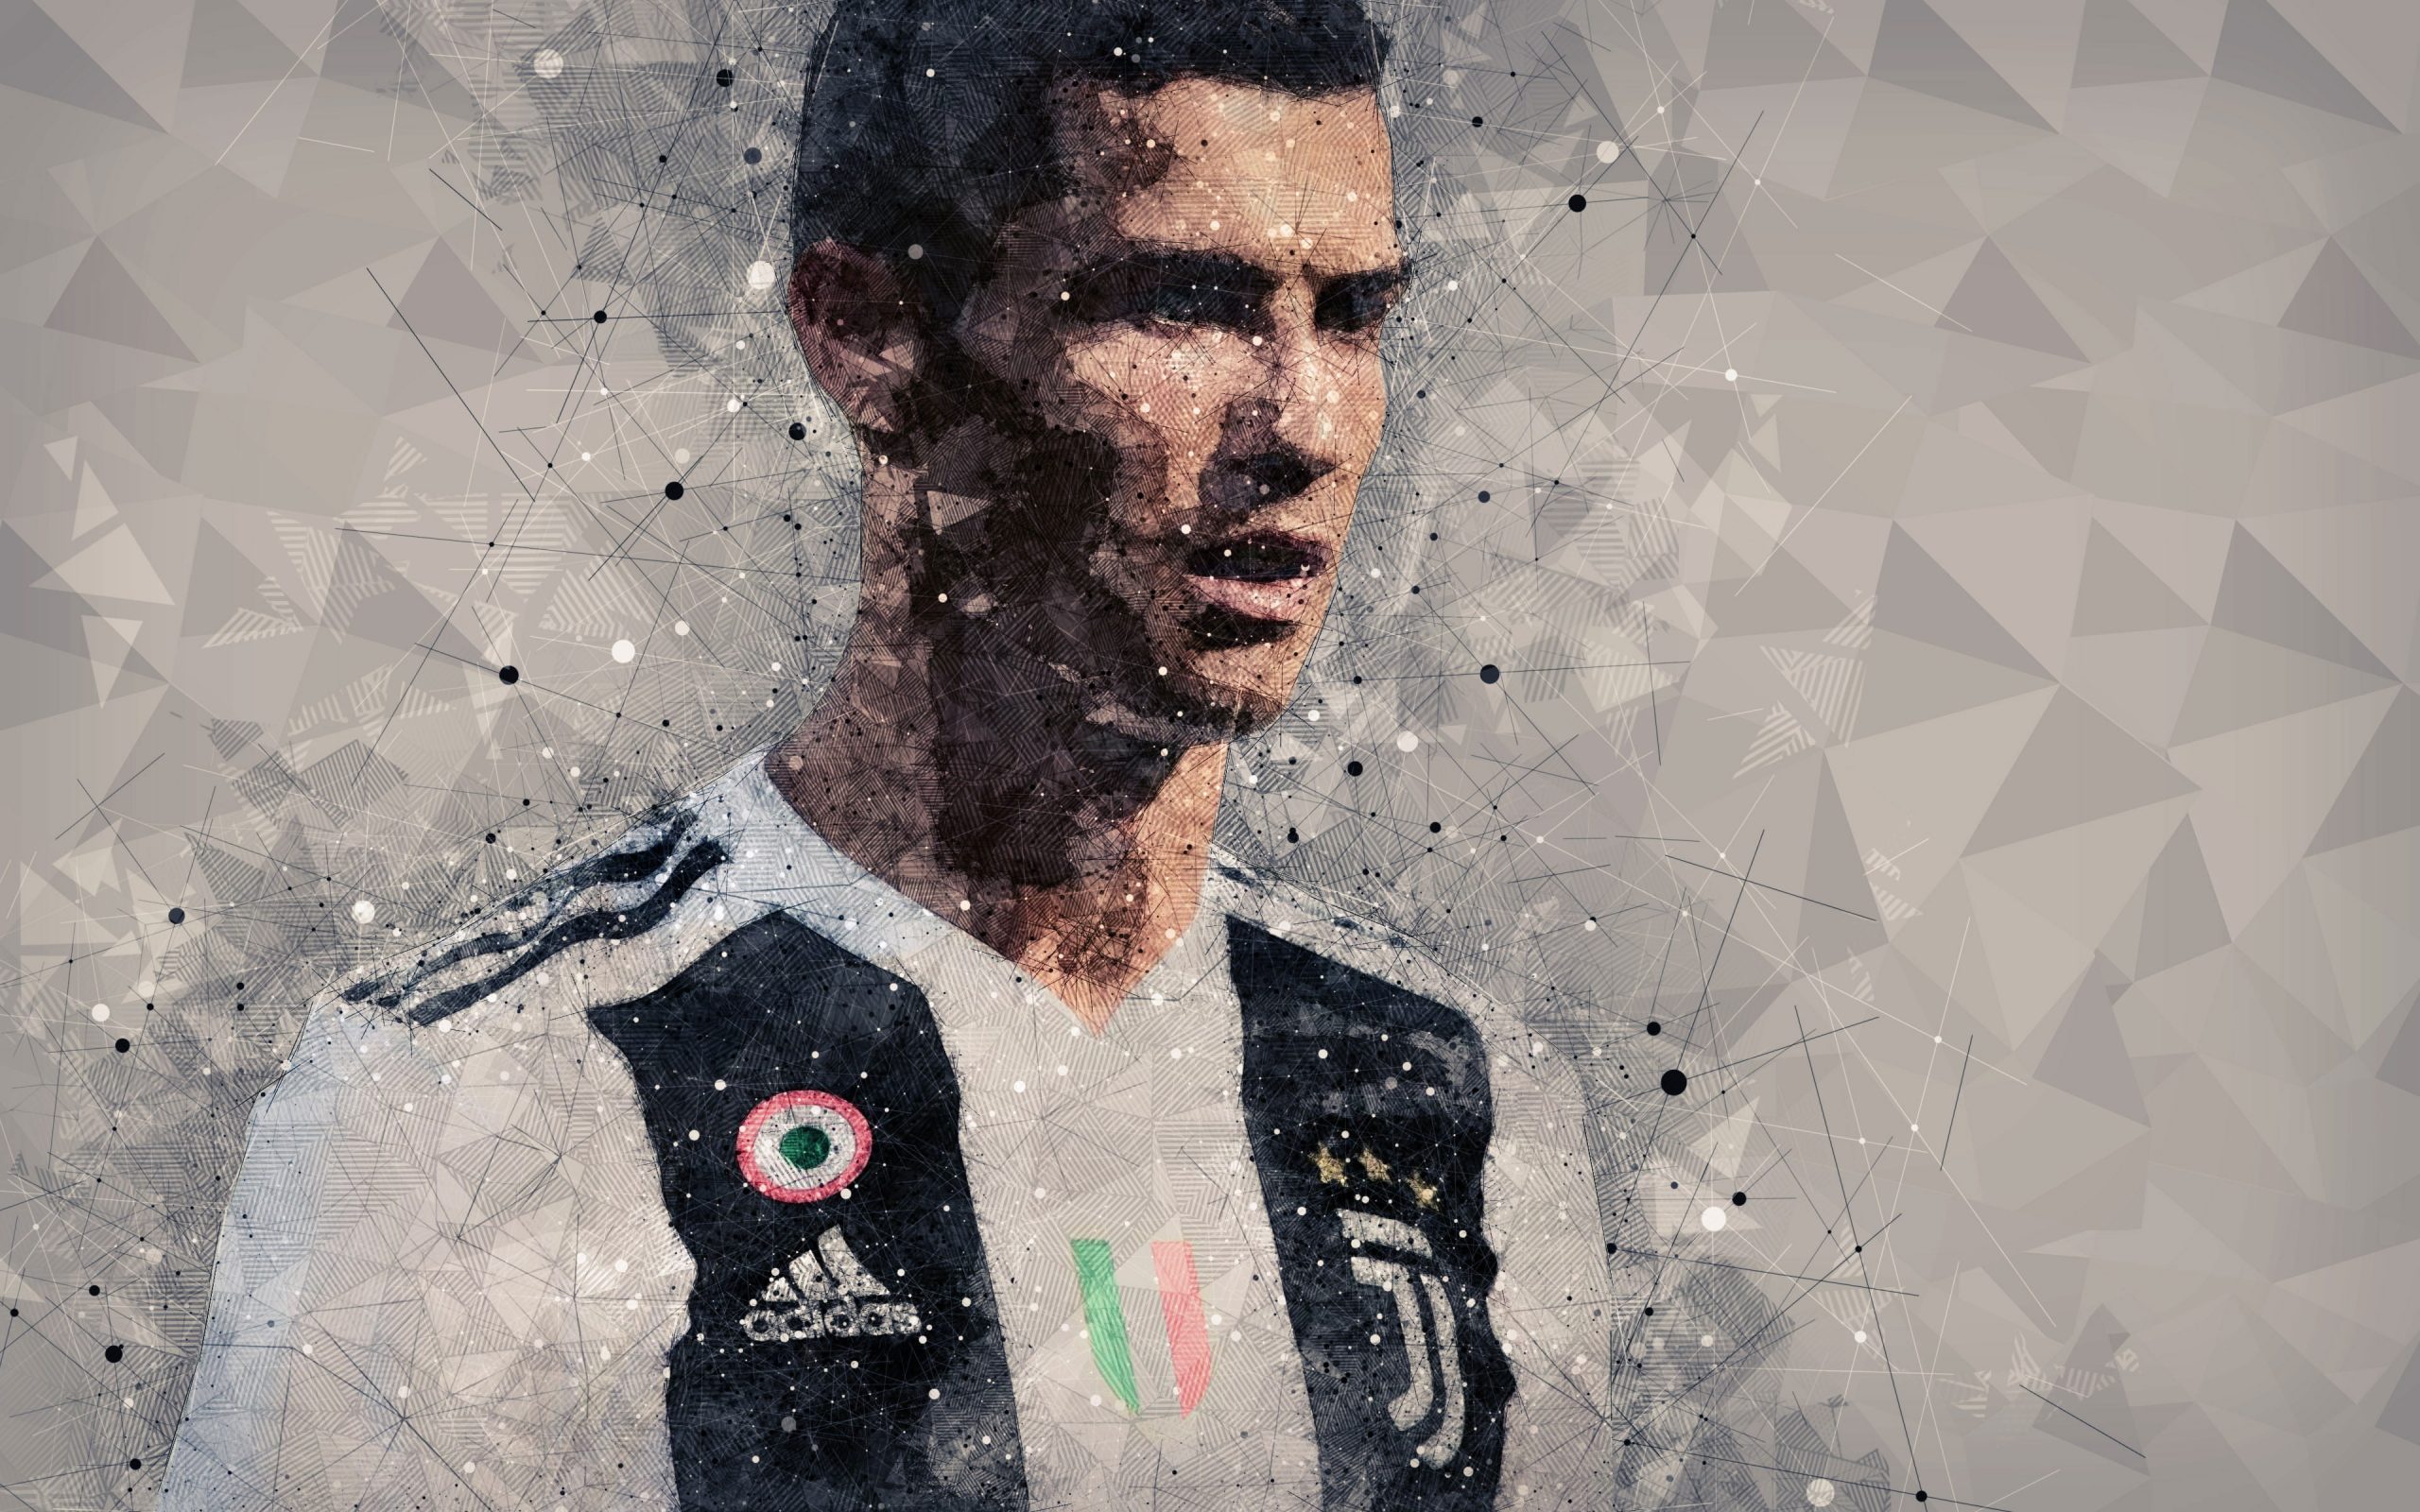 Soccer wallpaper, Cristiano Ronaldo, Juventus F.C.